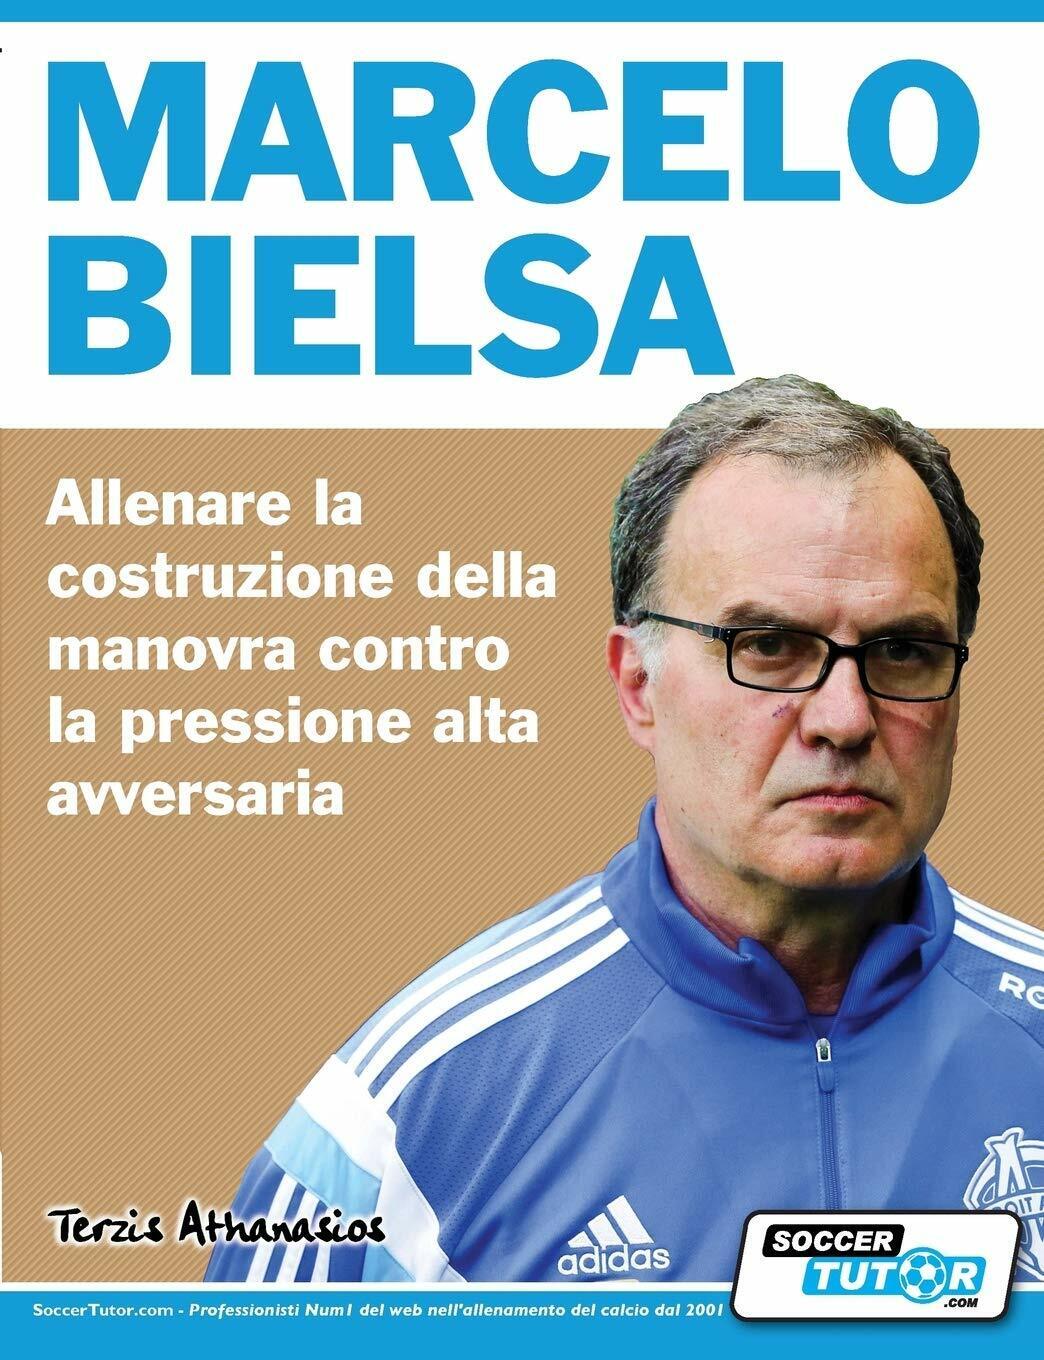 Marcelo Bielsa - Athanasios Terzis - SoccerTutor.com Ltd., 2018